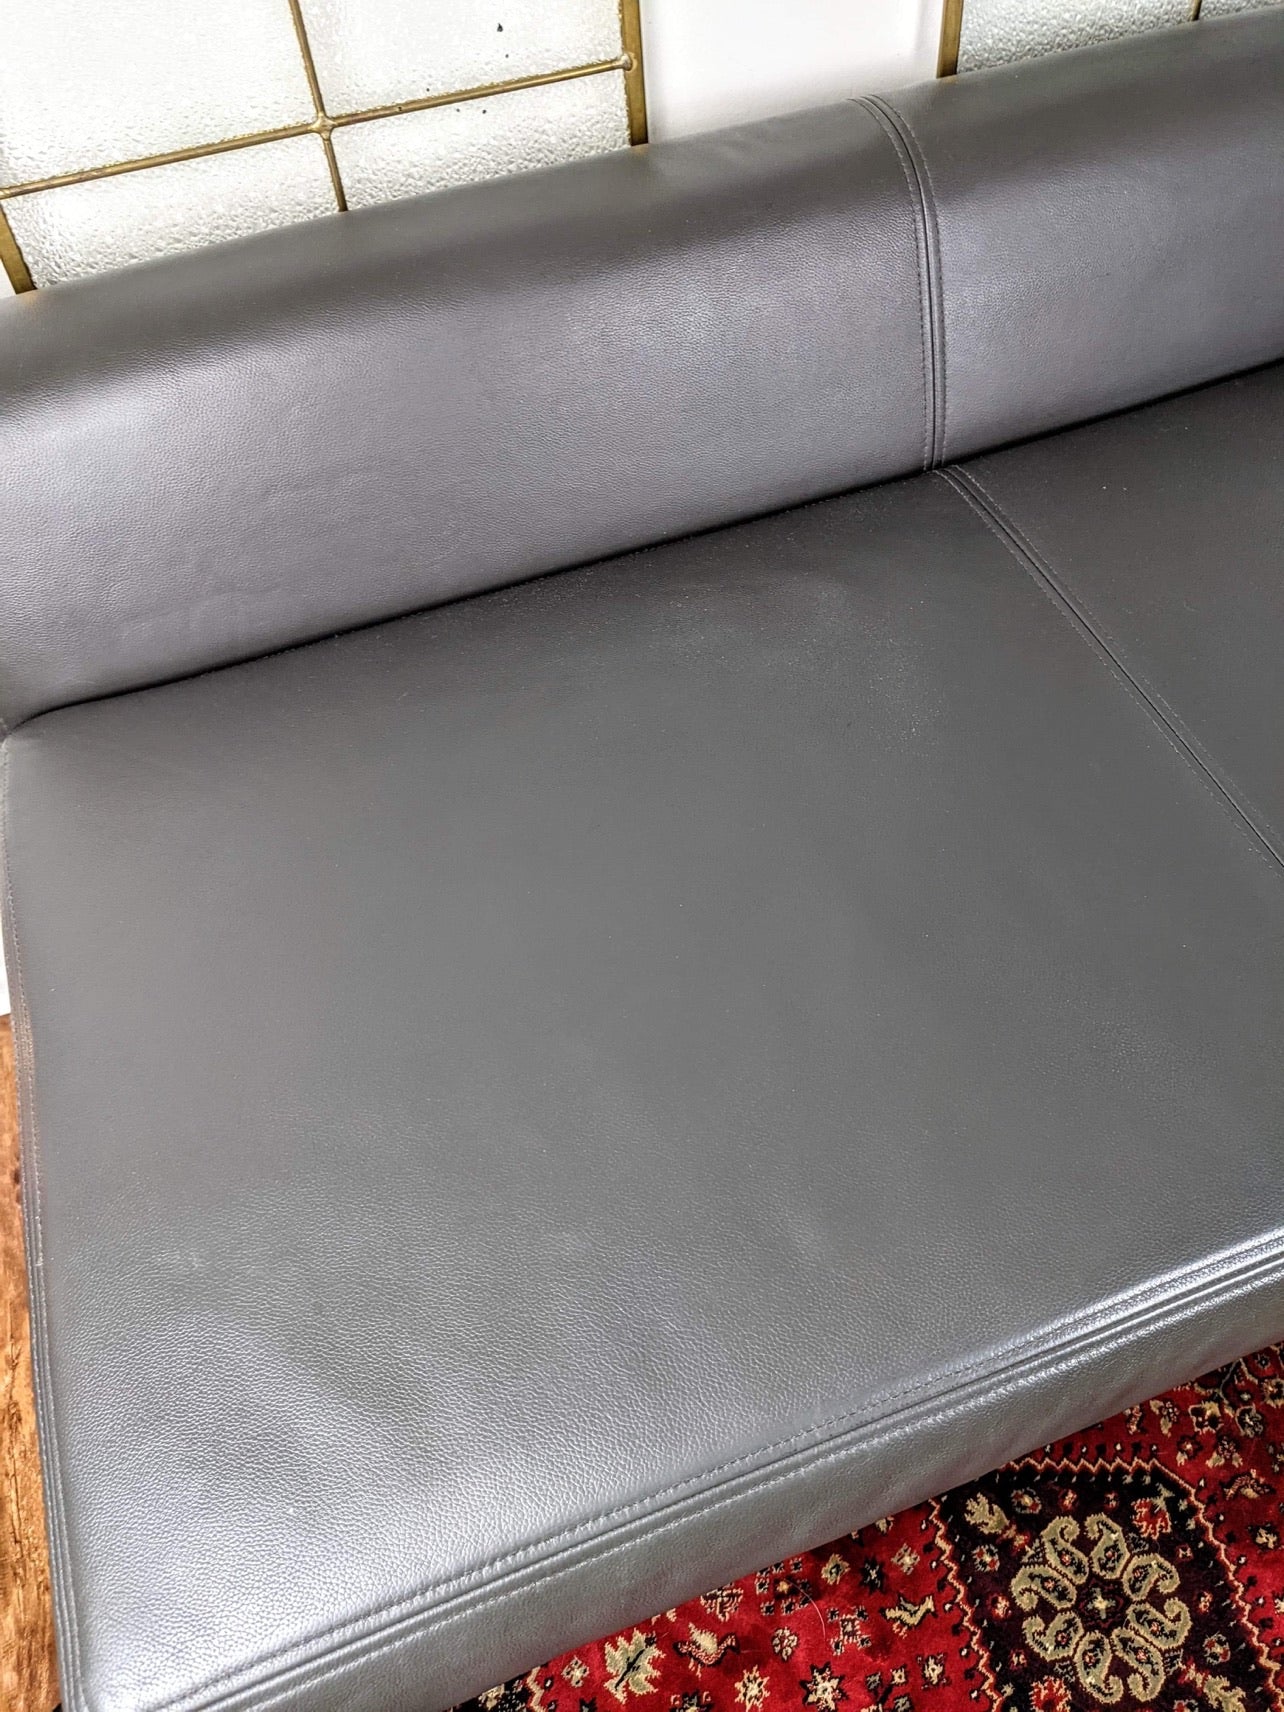 The Grey Aviator Sofa Bench